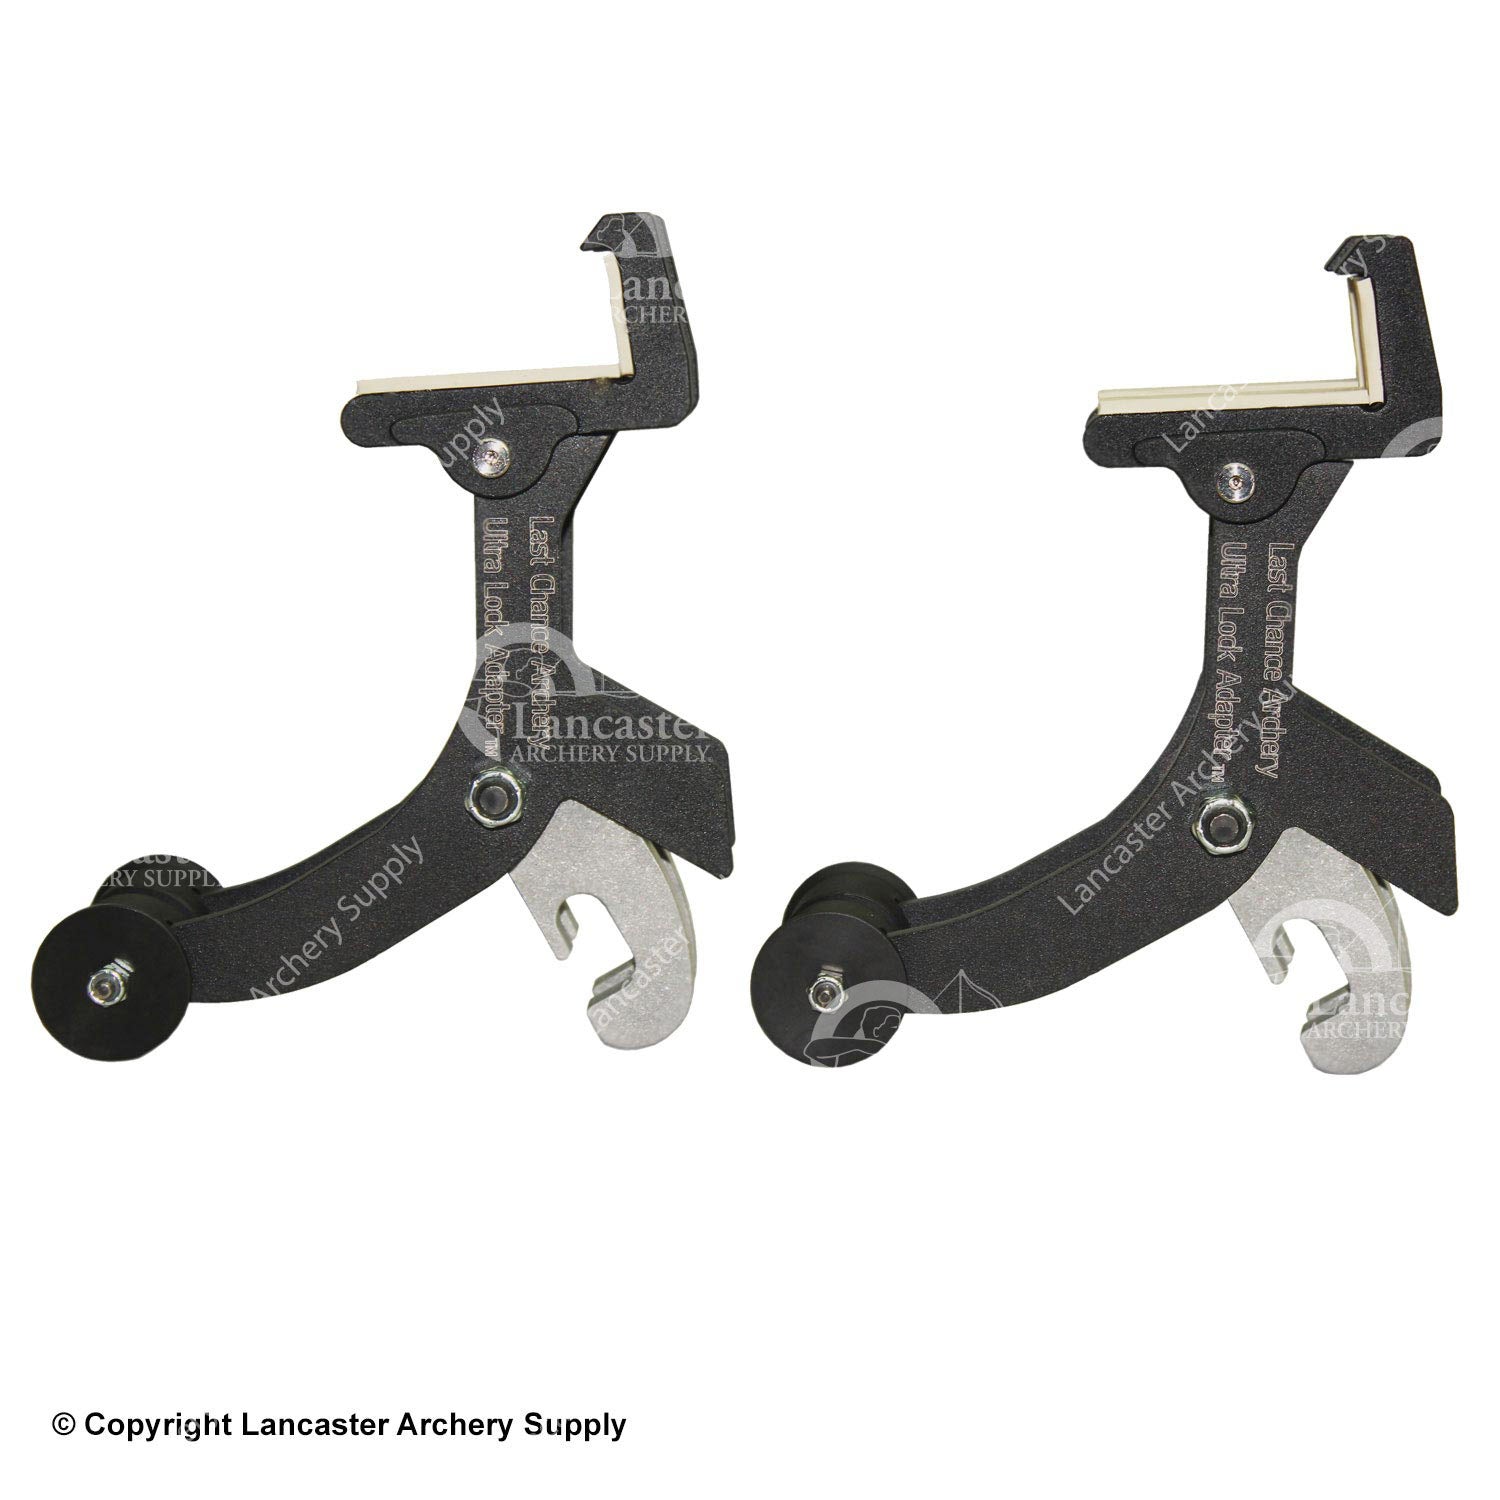 Last Chance Ultra Lock Adapter – Lancaster Archery Supply